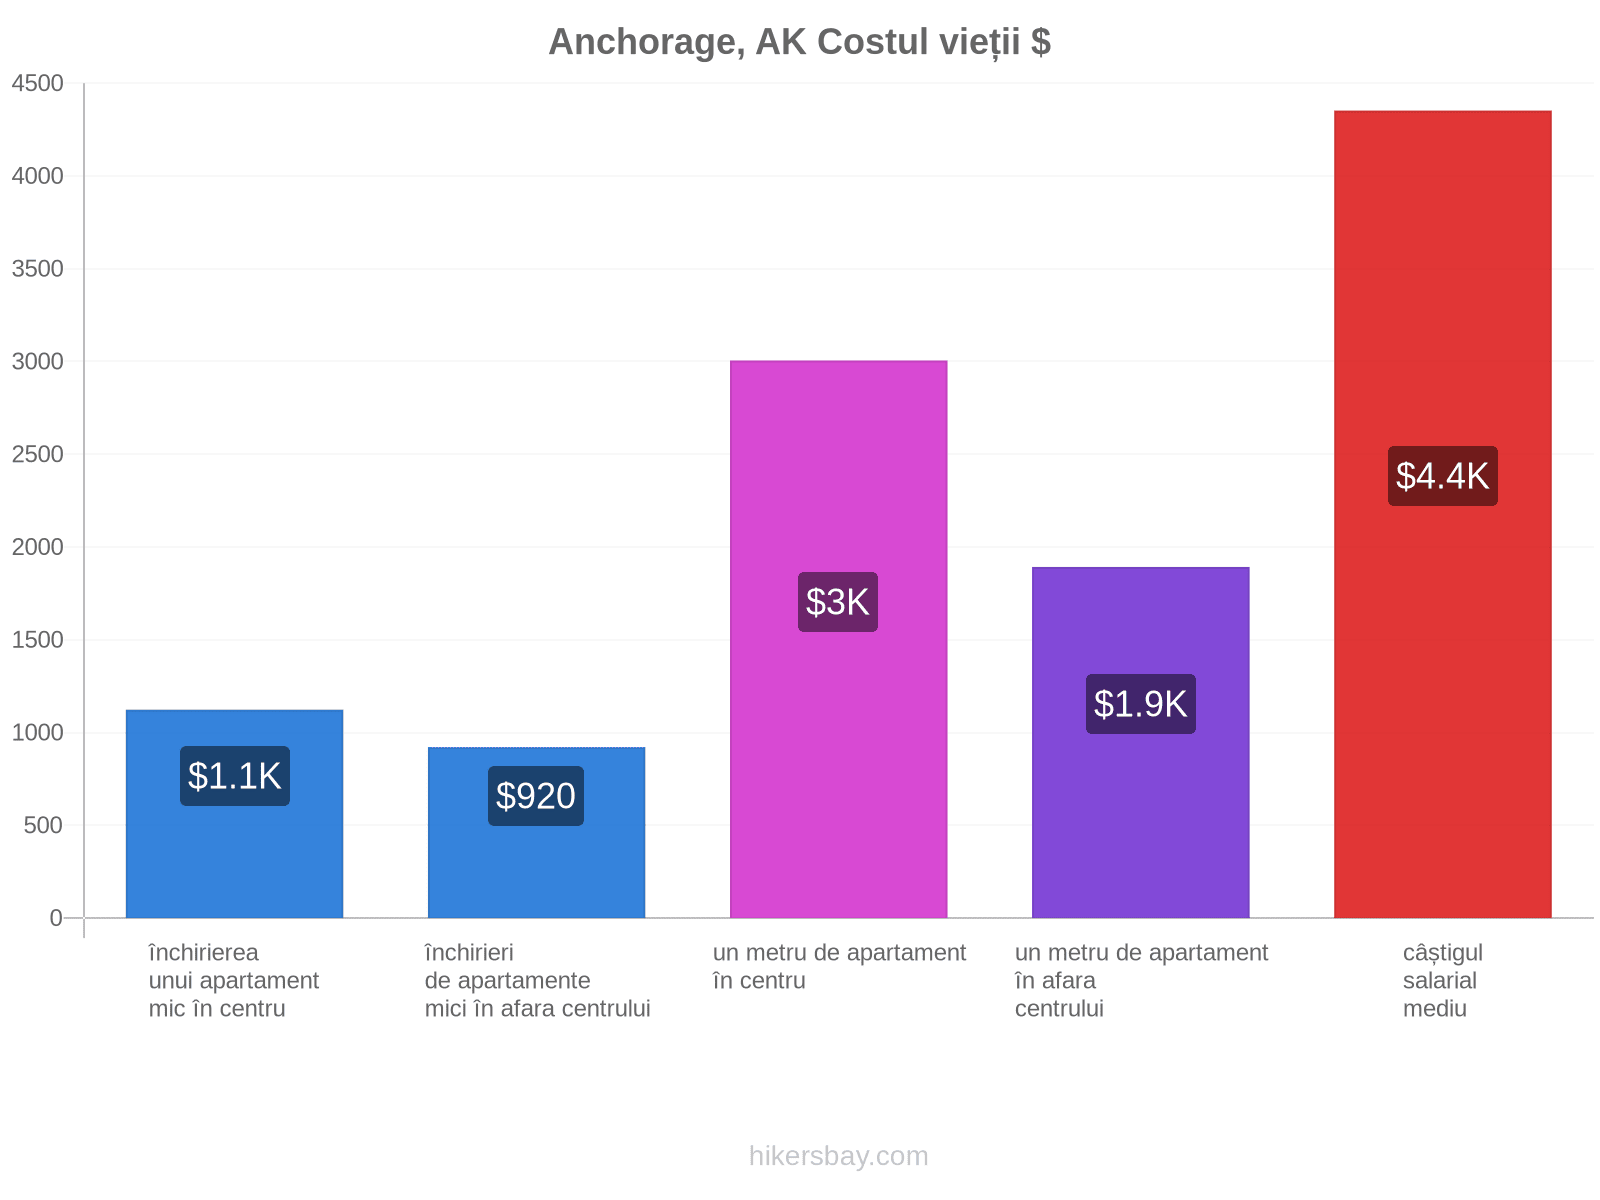 Anchorage, AK costul vieții hikersbay.com